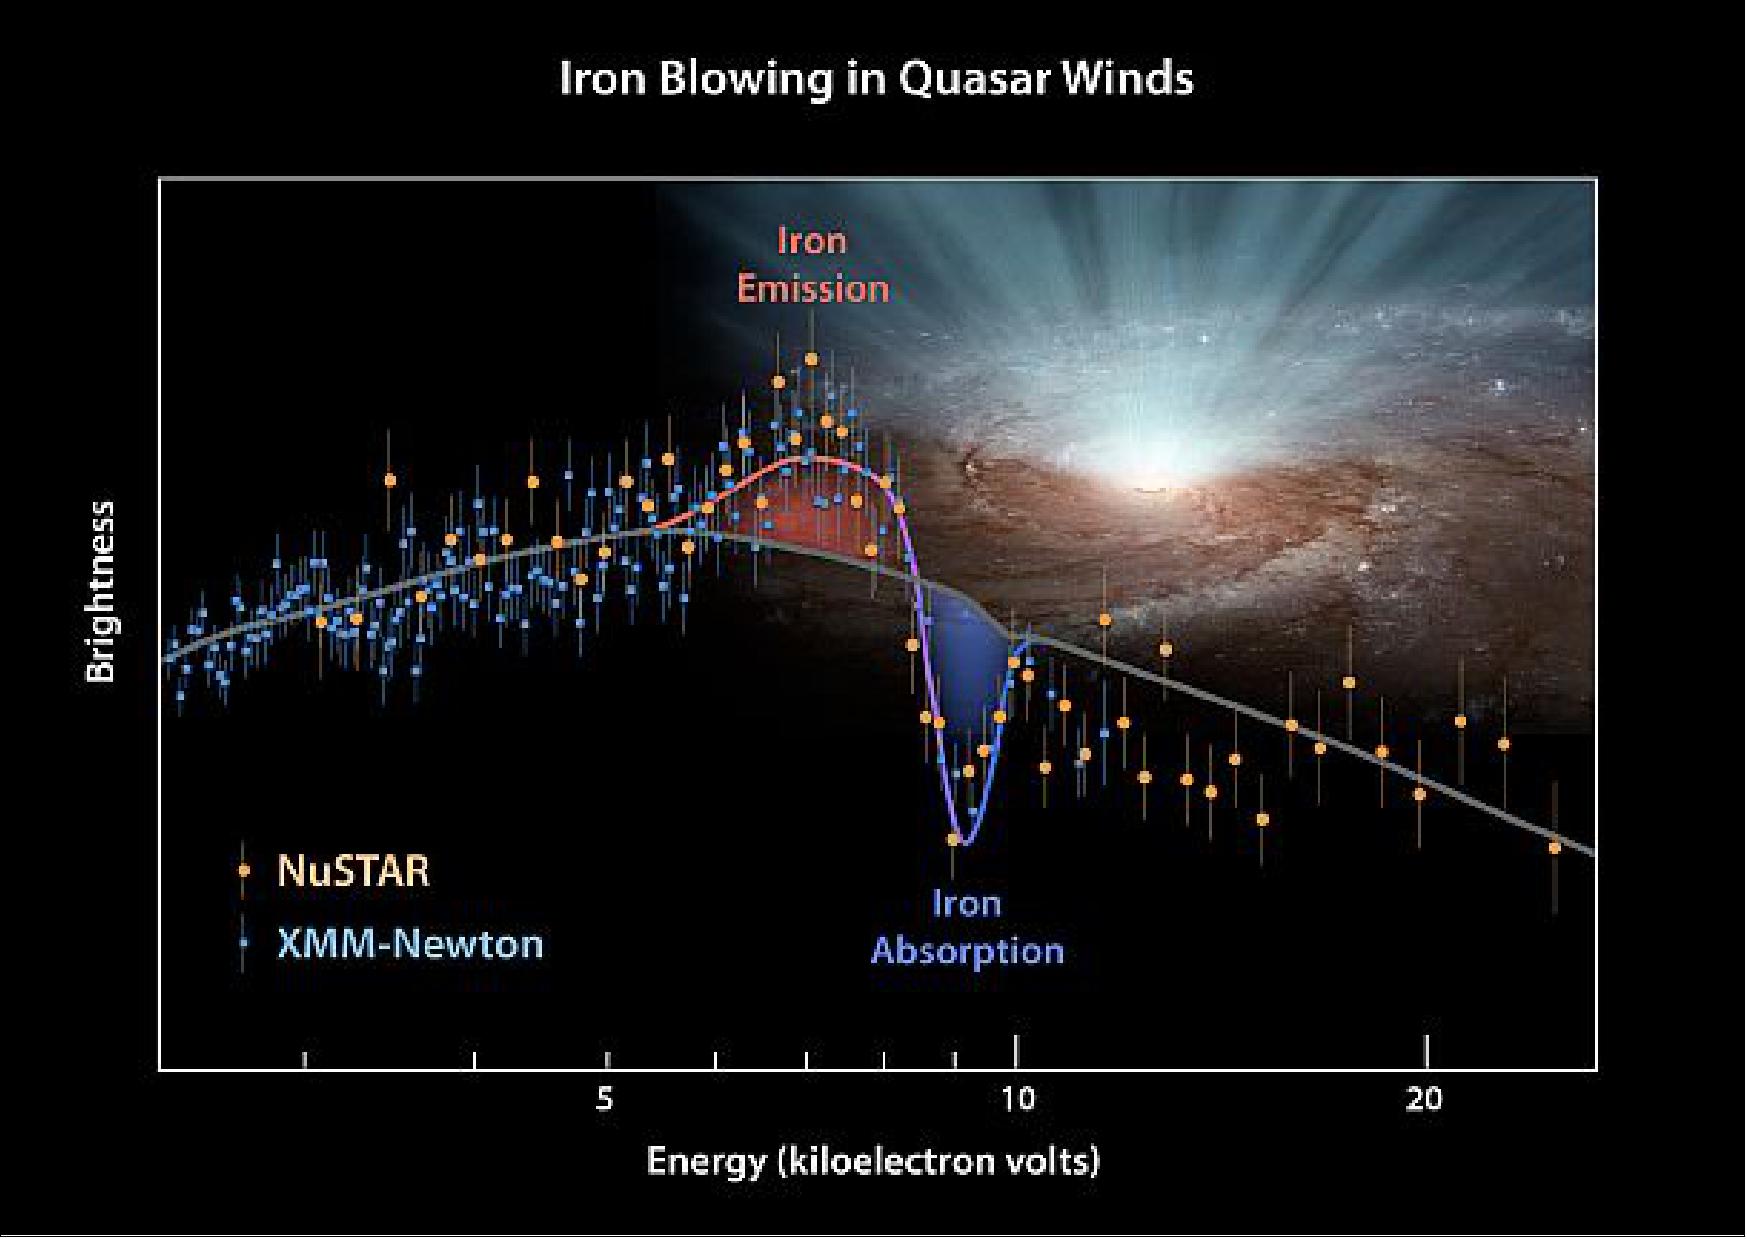 Figure 38: XMM-Newton and NuSTAR spectrum of the quasar PDS 456 (image credit: NASA/JPL-Caltech, Keele University, UK)